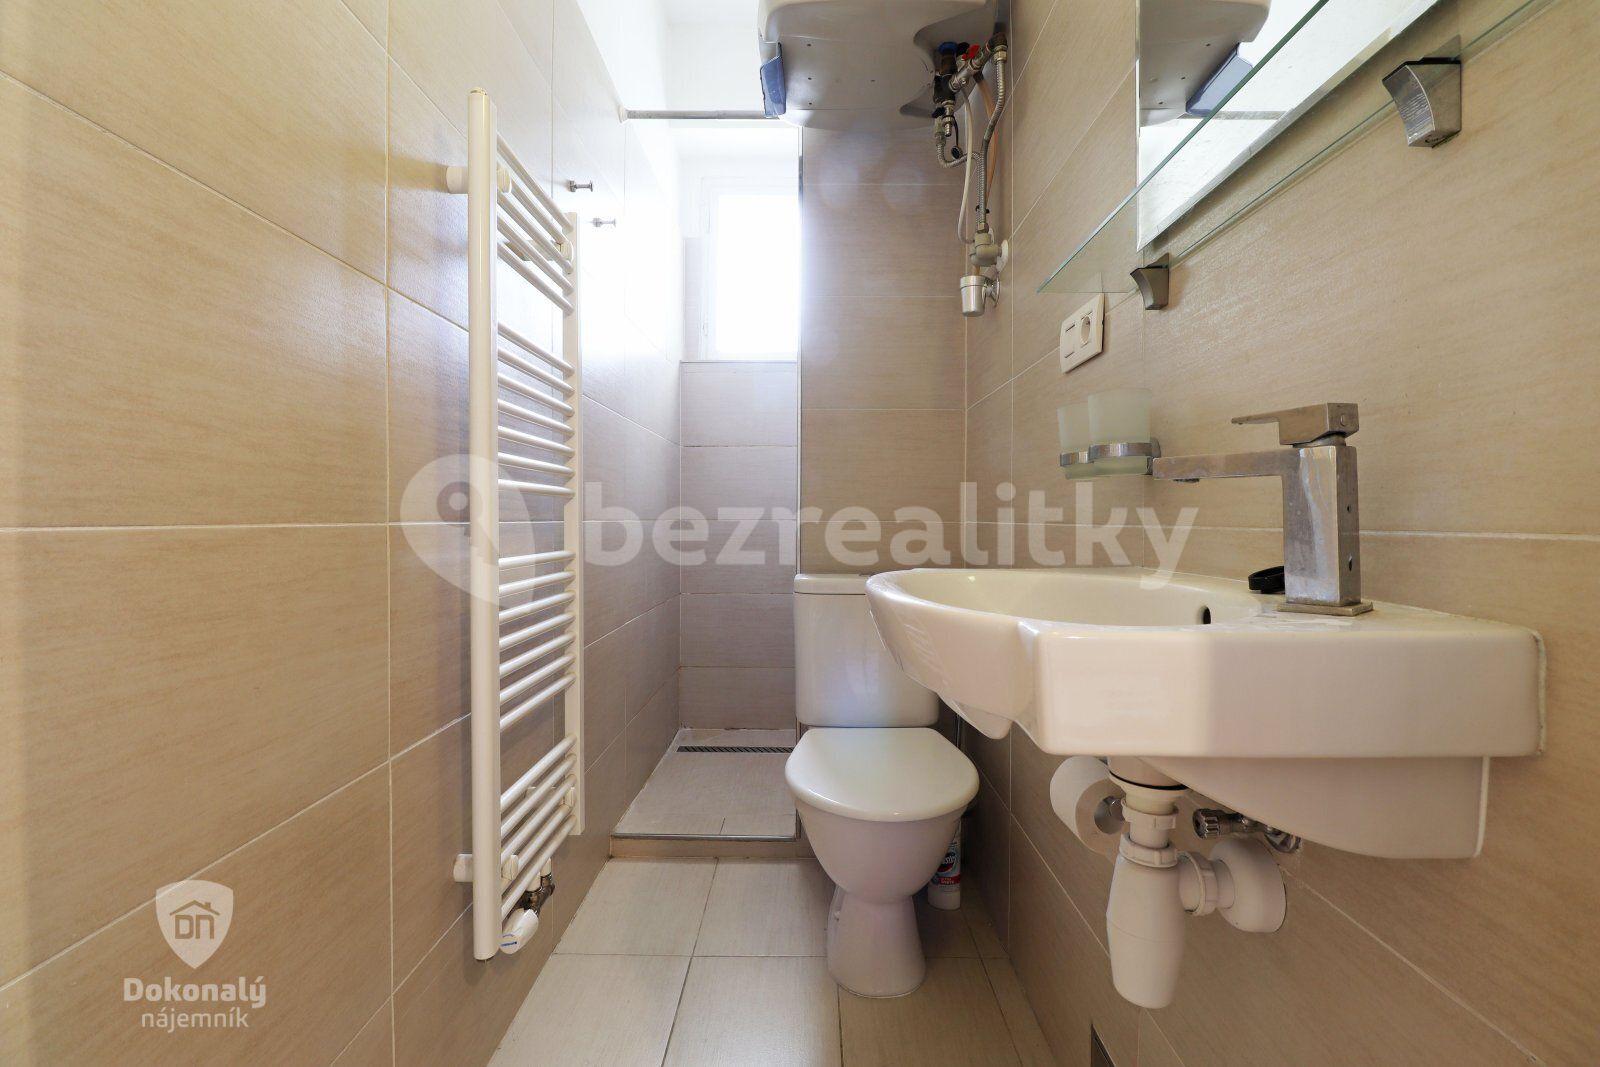 1 bedroom with open-plan kitchen flat to rent, 42 m², Kroftova, Prague, Prague